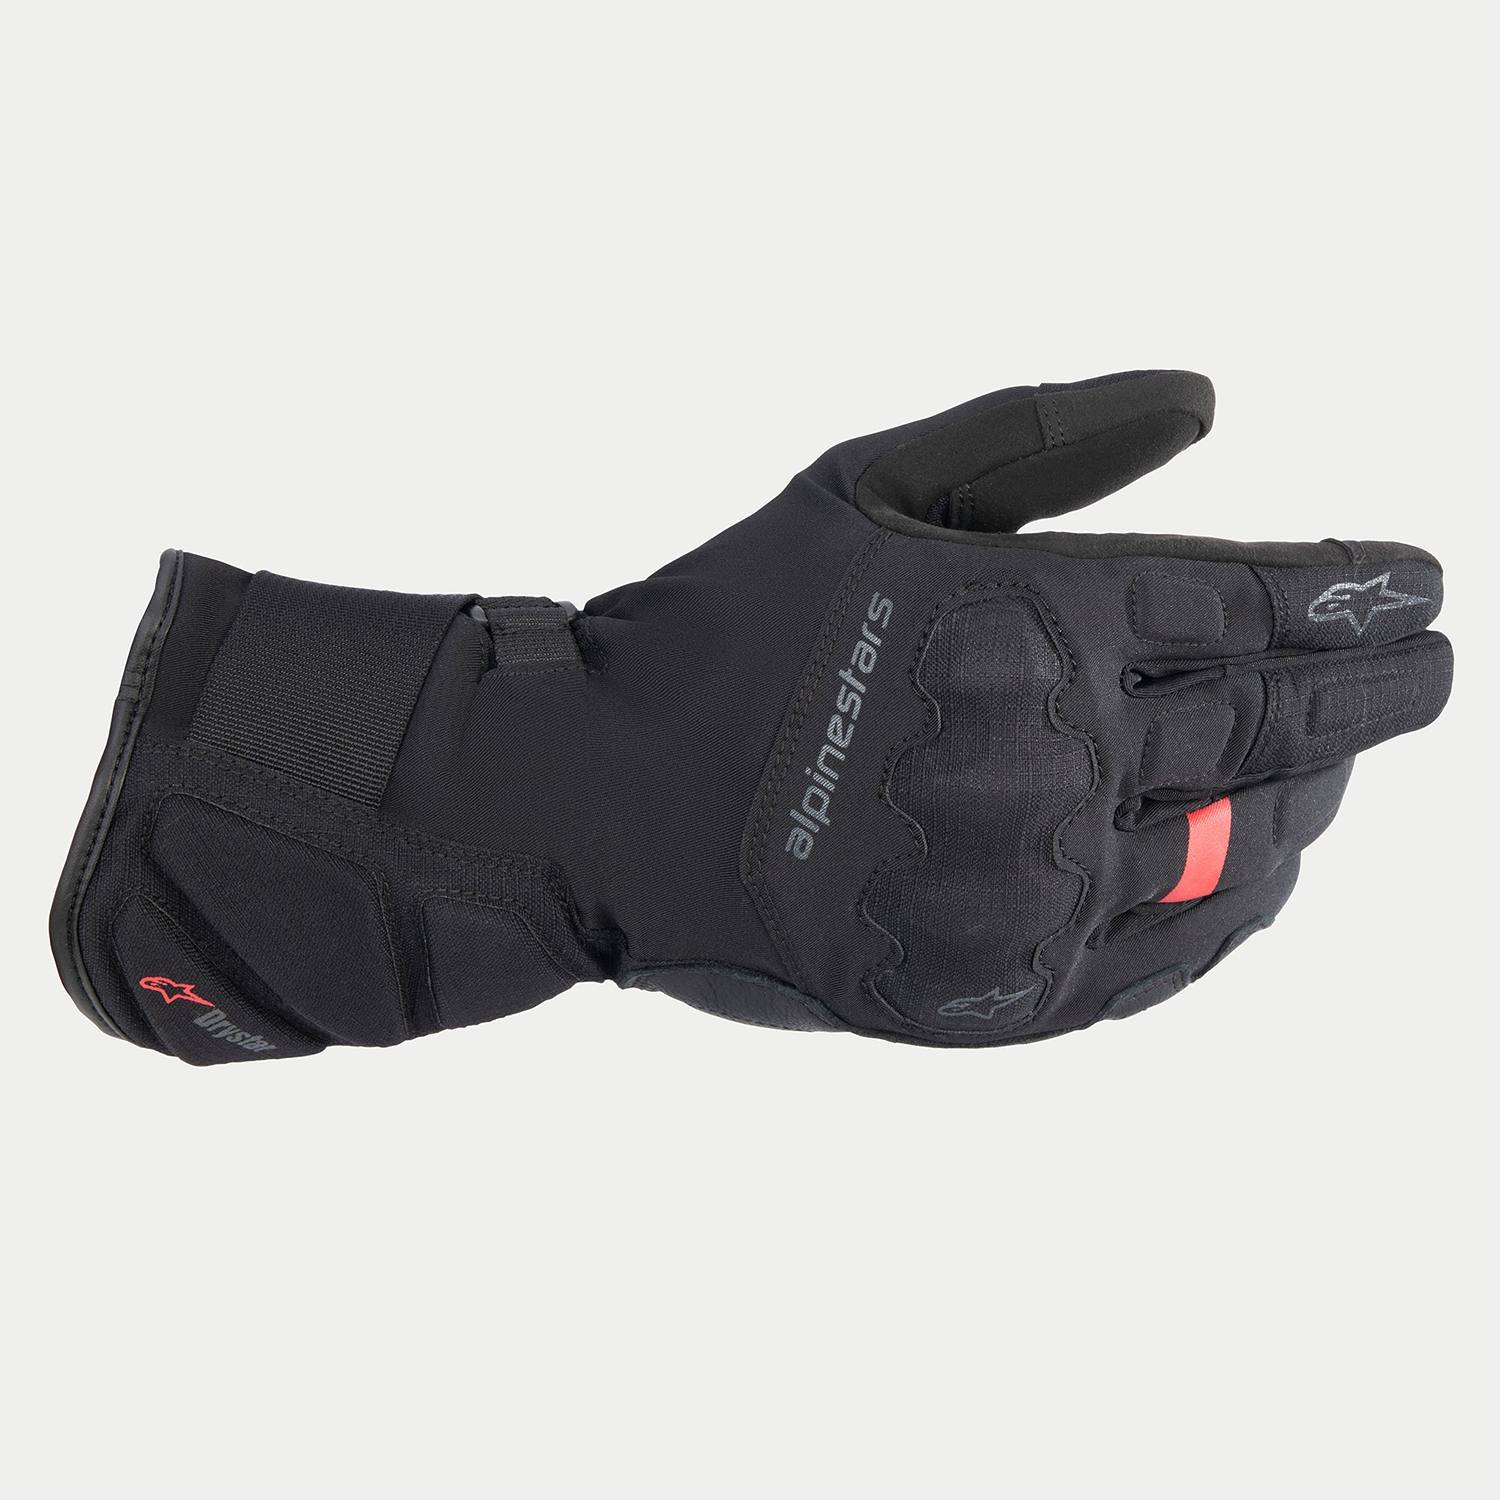 Image of Alpinestars Stella Tourer W-7 V2 Drystar Gloves Black Size M ID 8059347194509